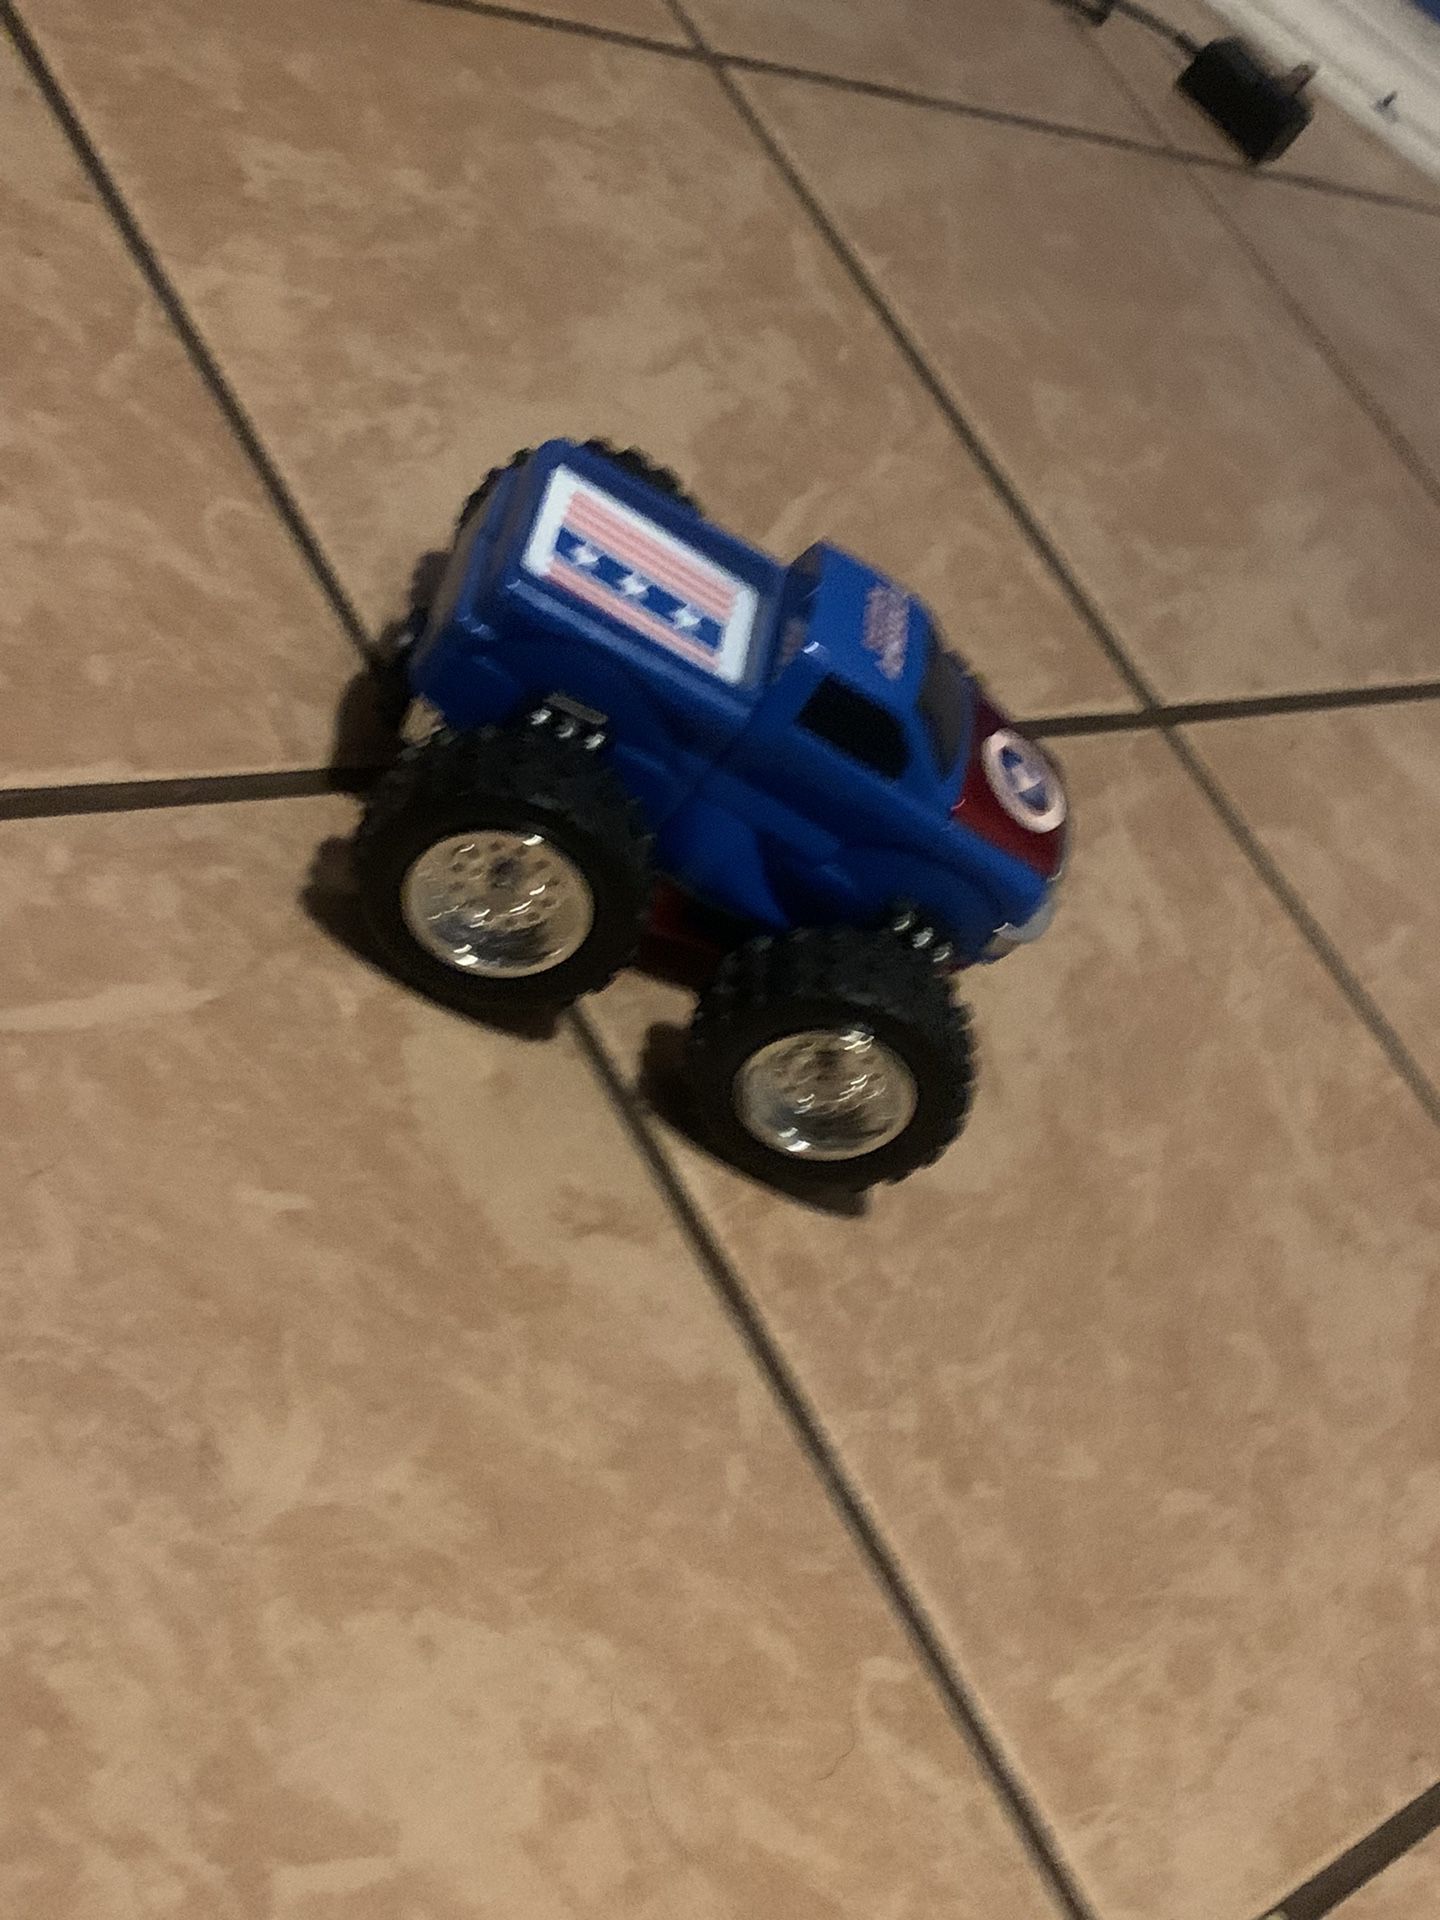 Captain America Toy Car